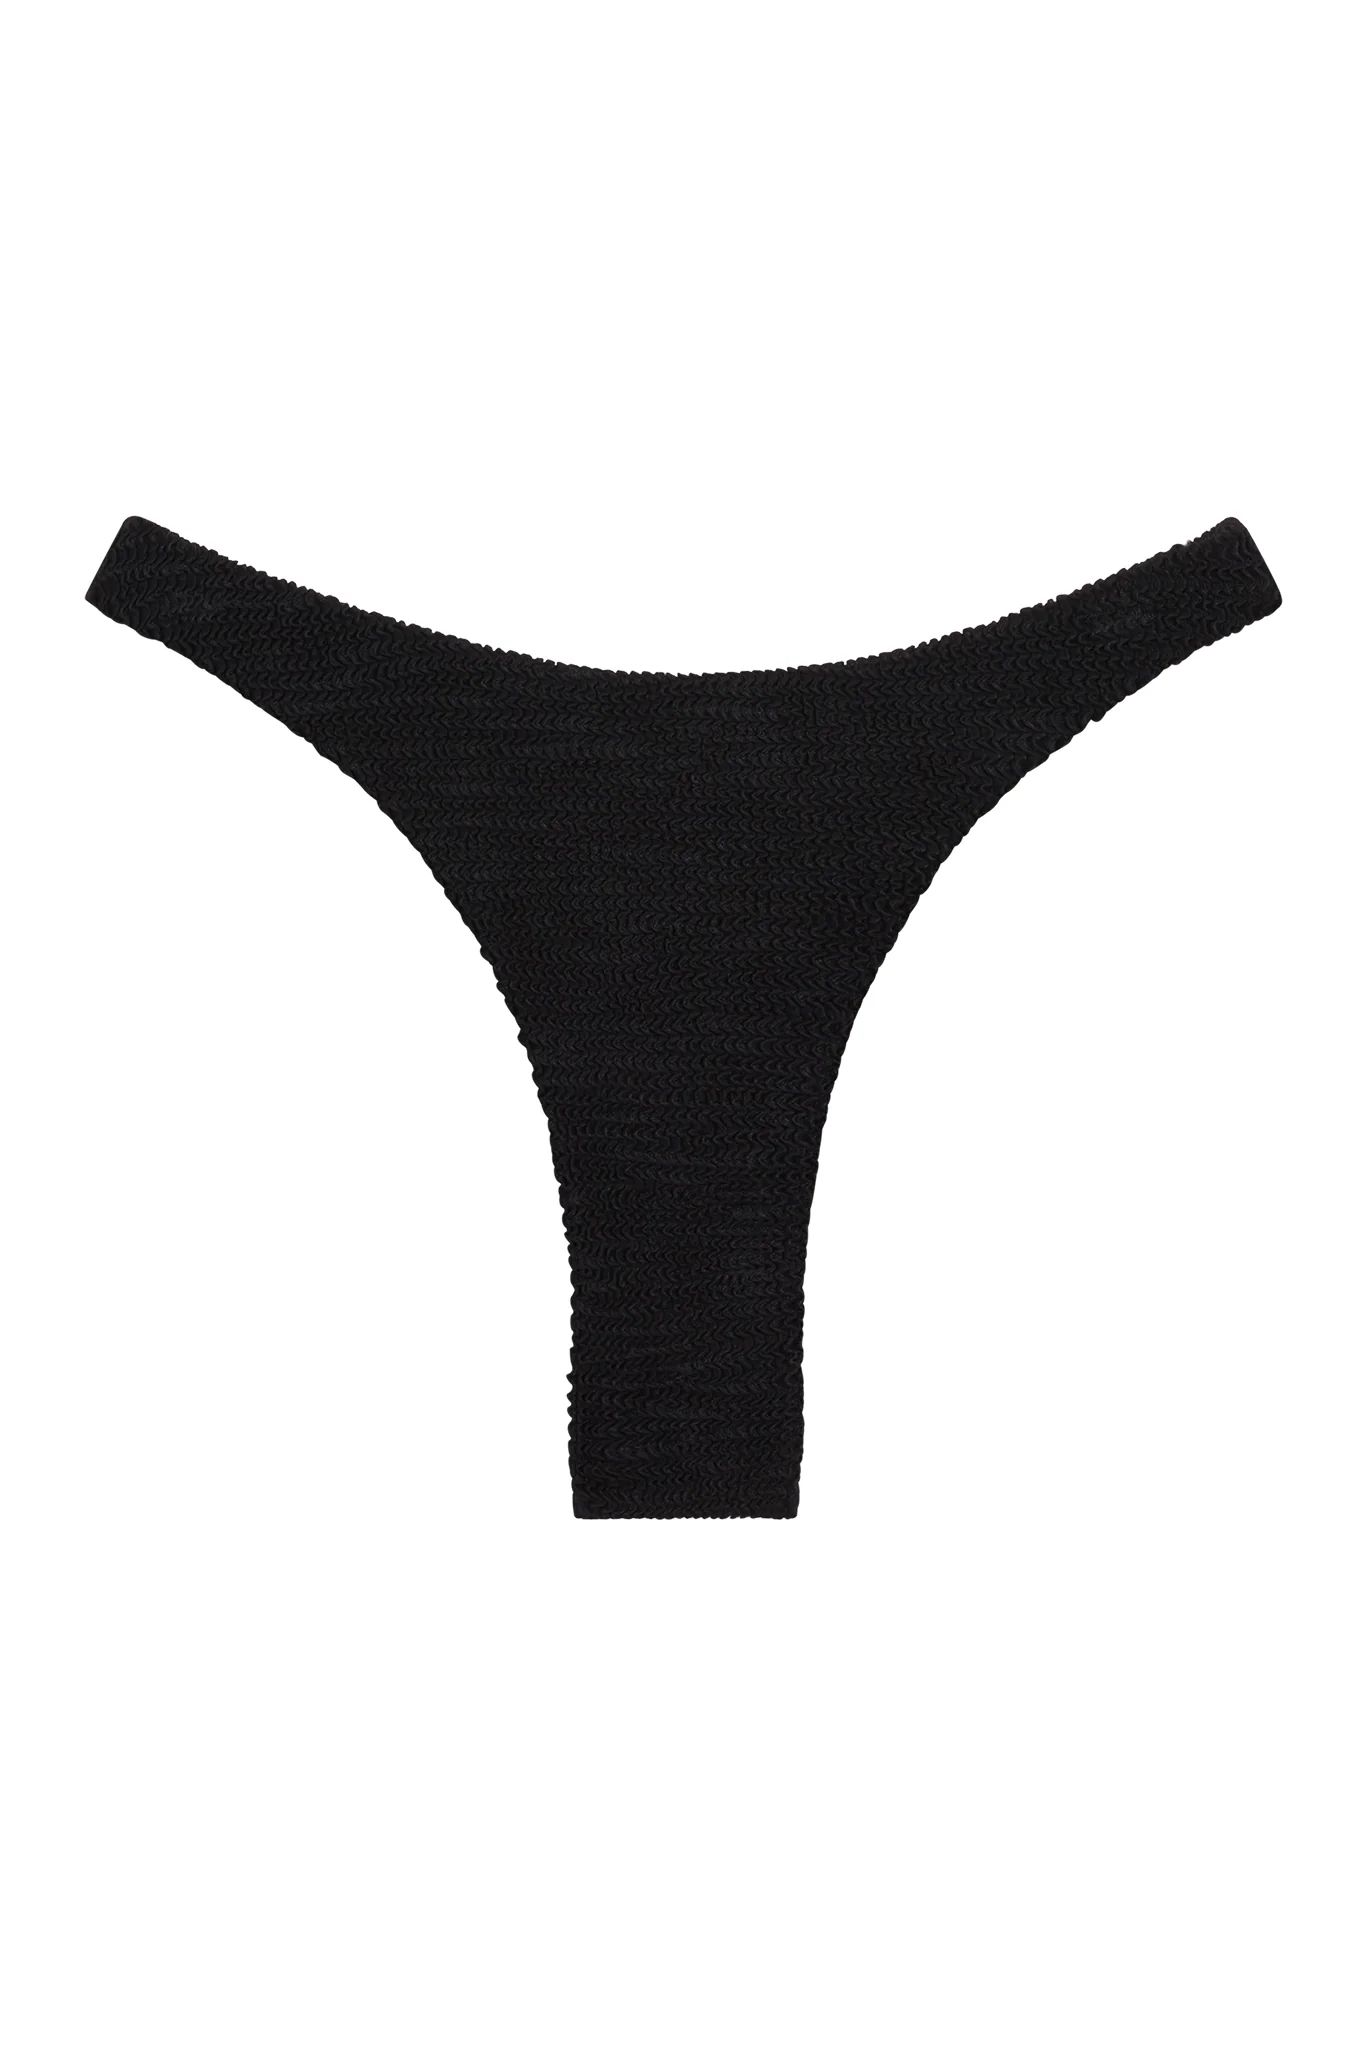 Tamarama Bottom - Black Crinkle | Monday Swimwear